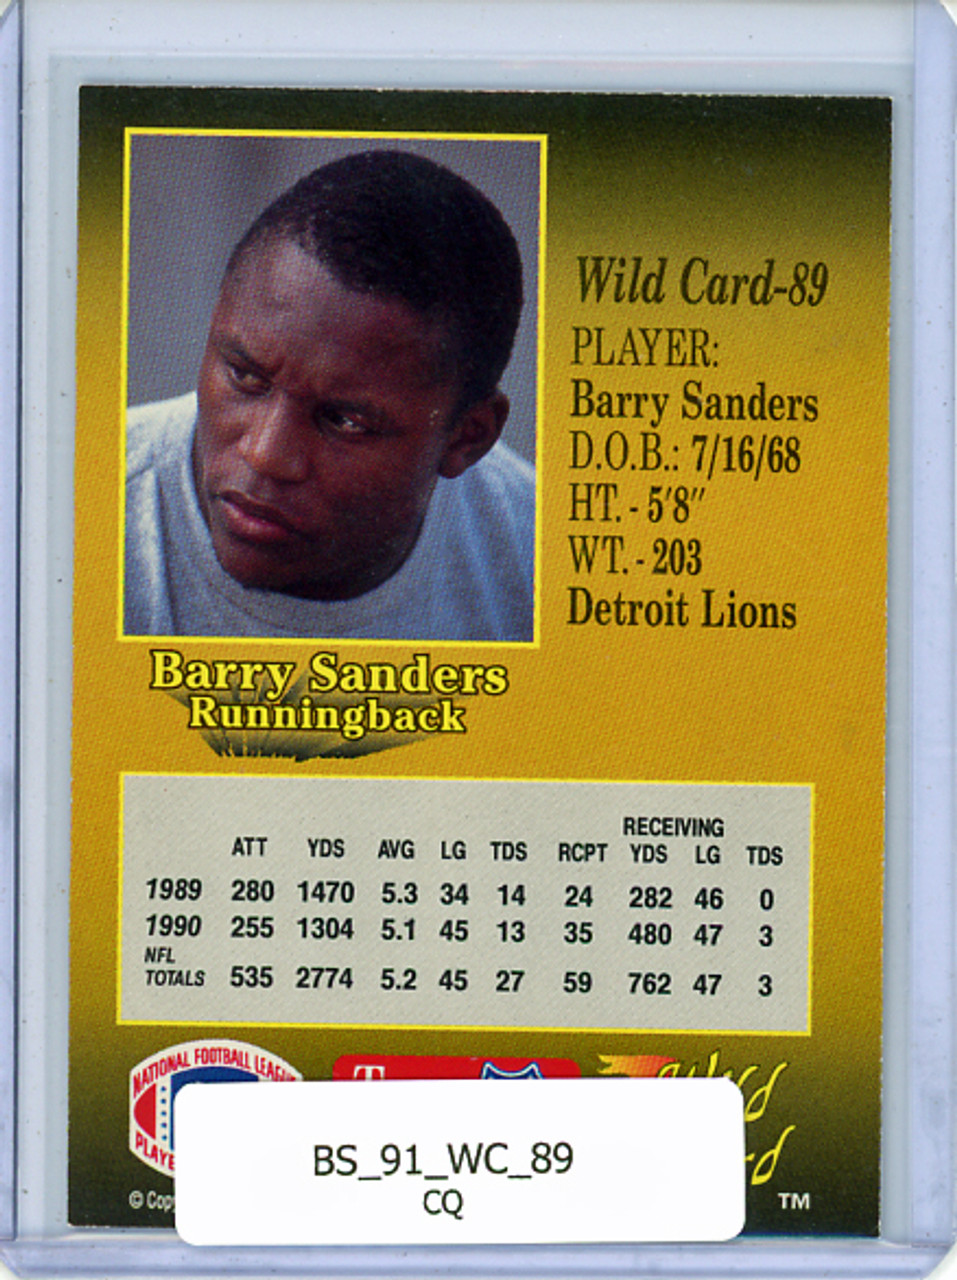 Barry Sanders 1991 Wild Card #89 (CQ)